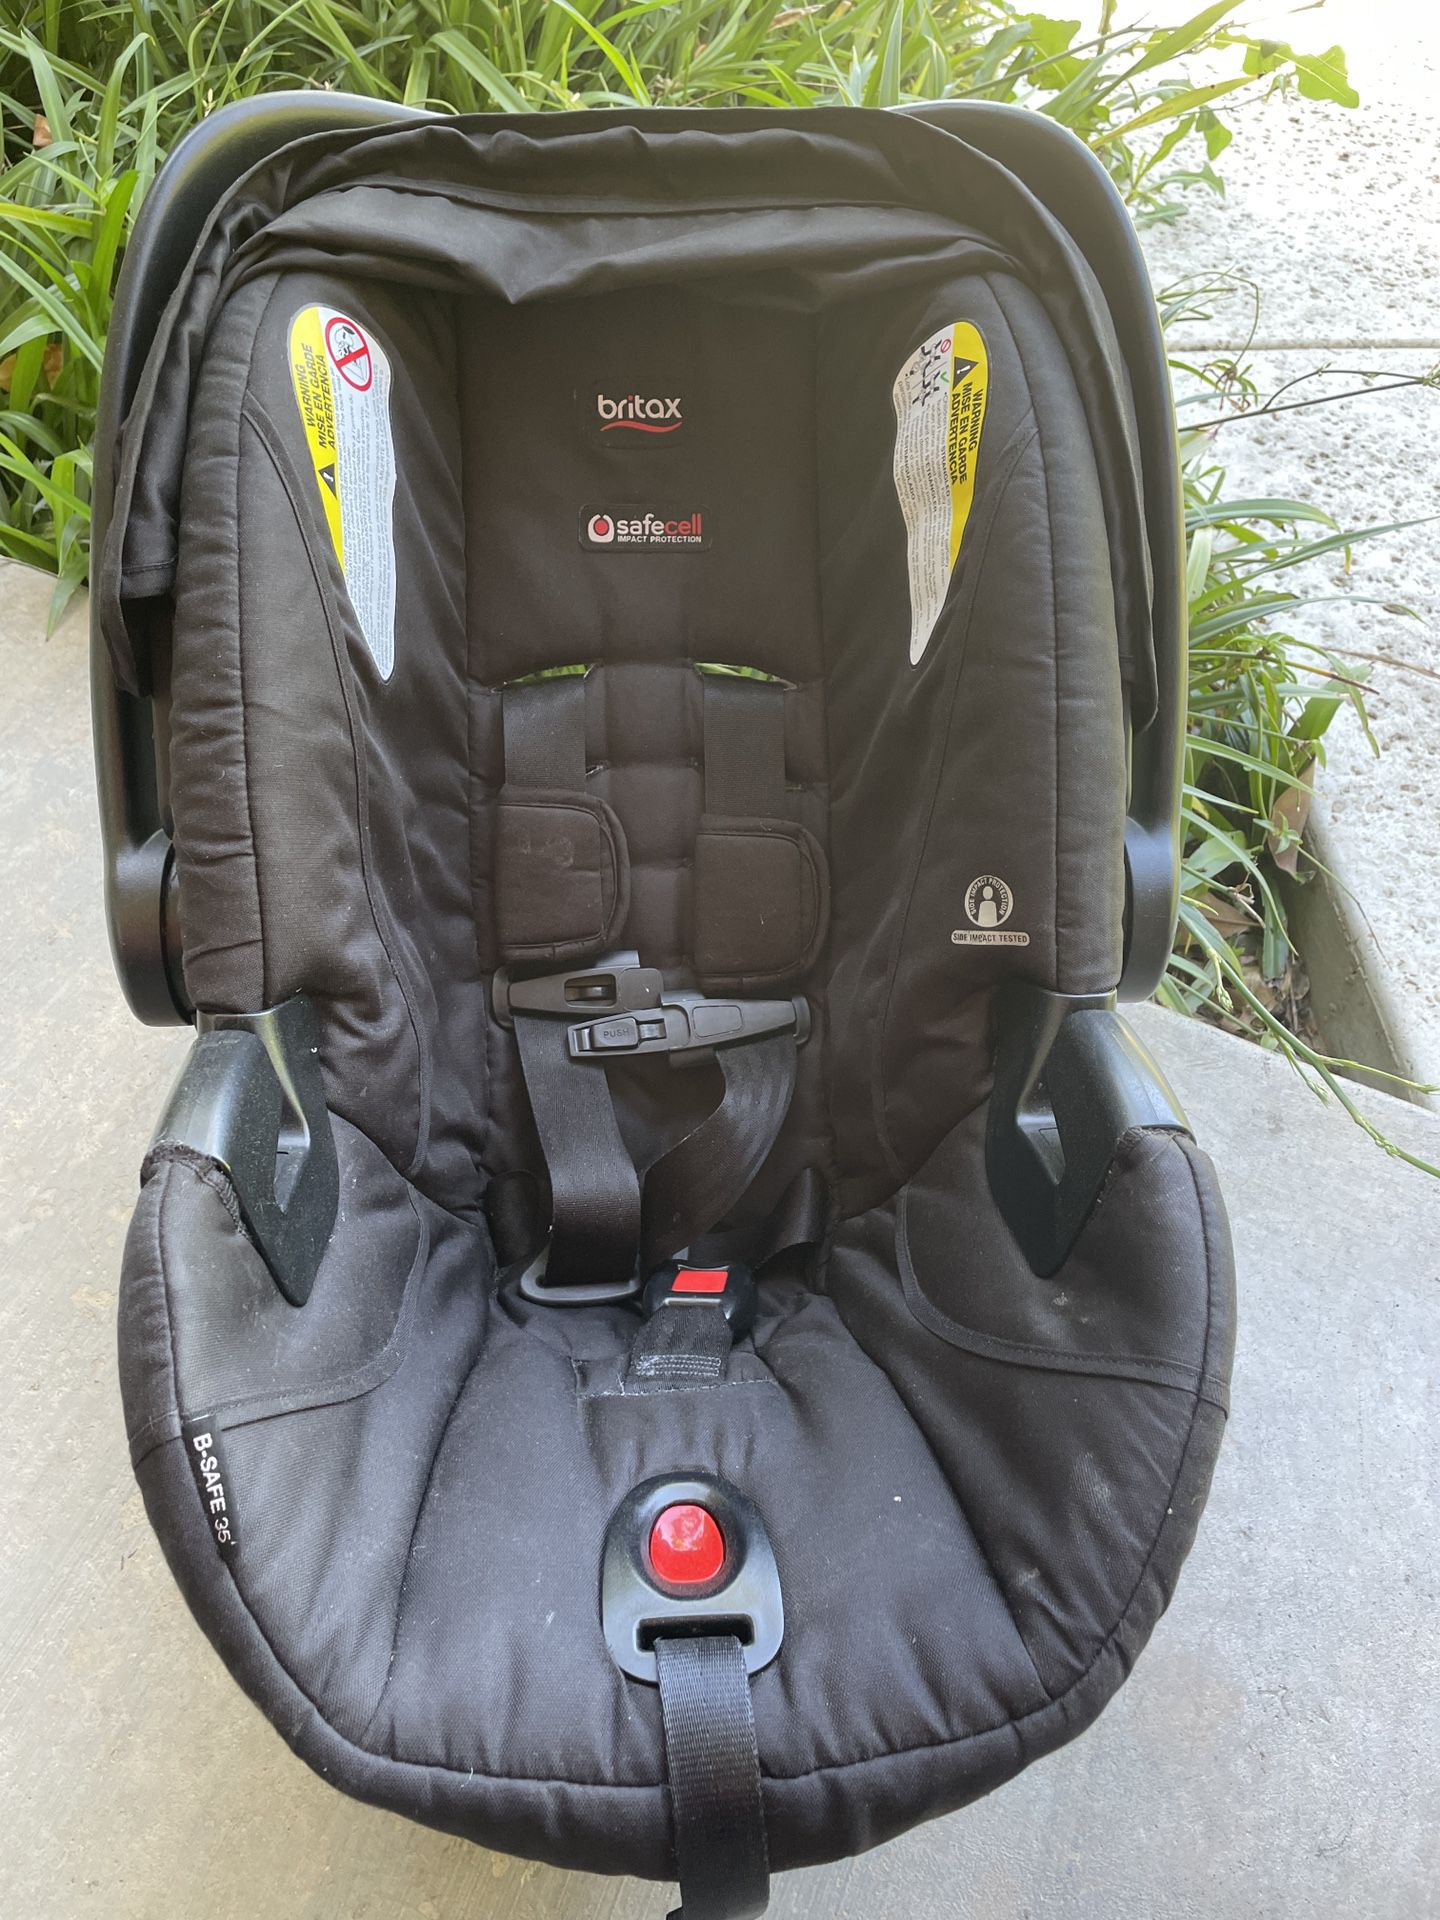 Britax Infant Rear Facing Car Seat & Base